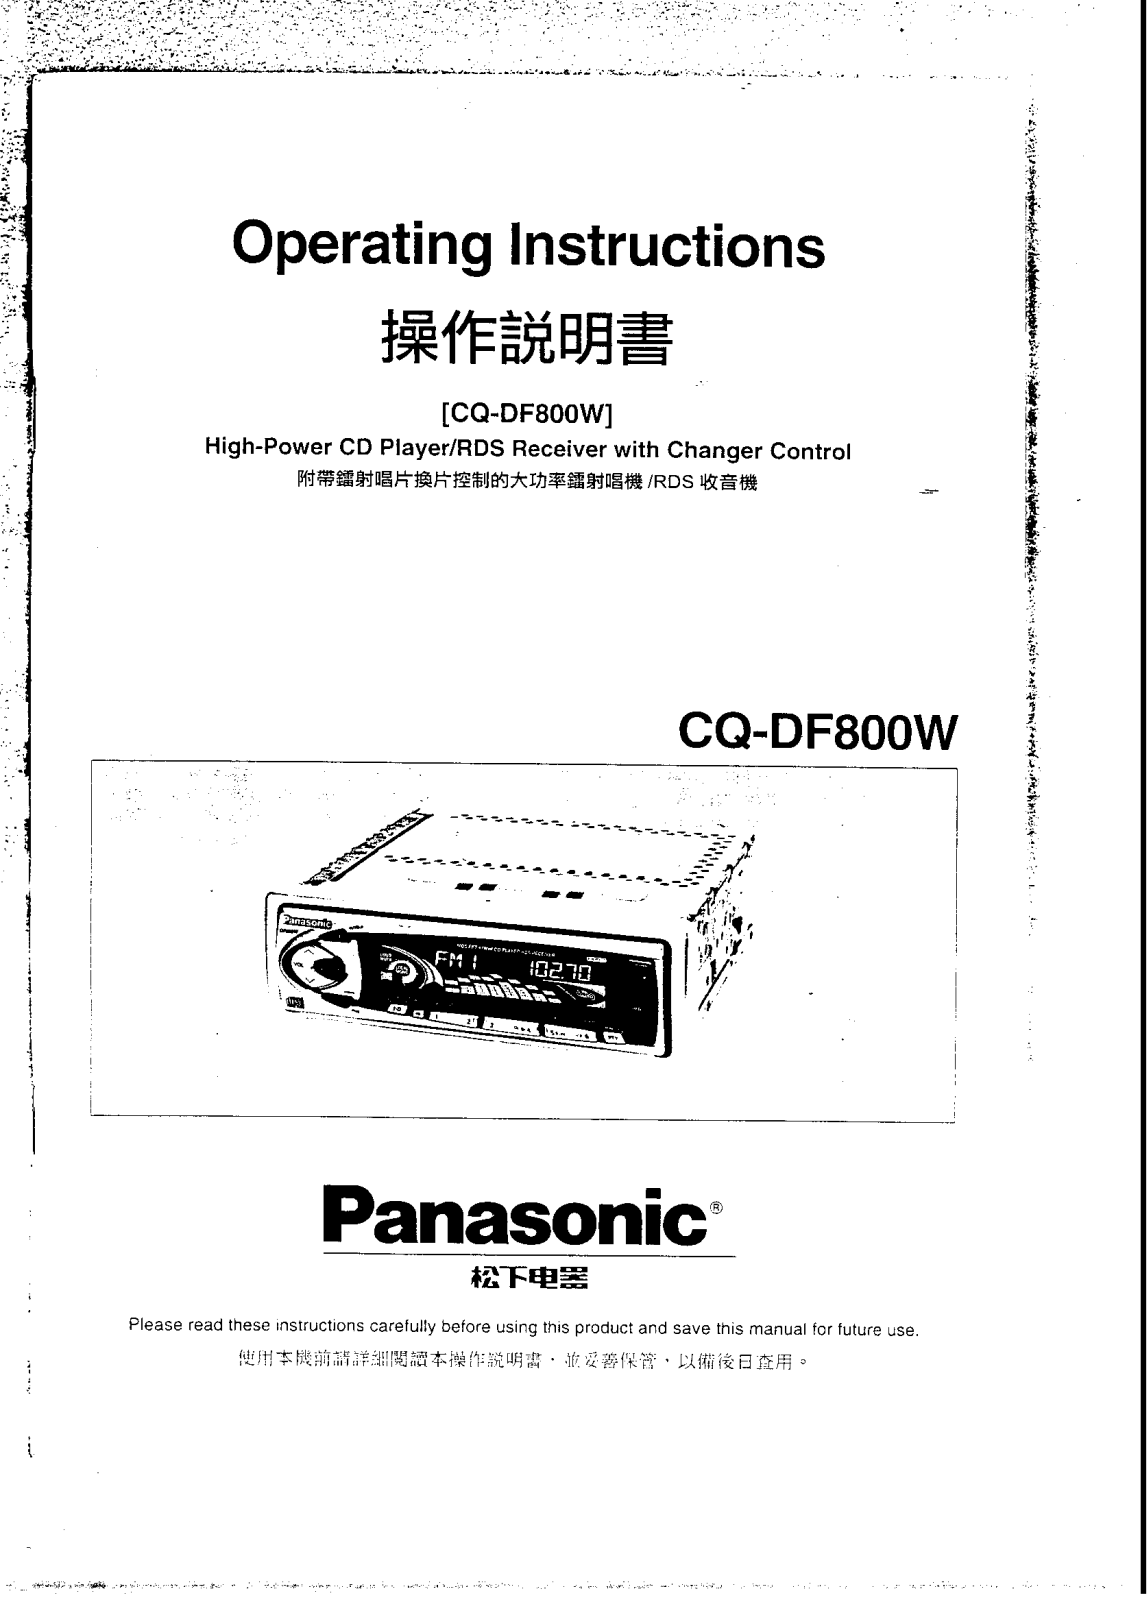 Panasonic CQ-DF800W Operating Instructions